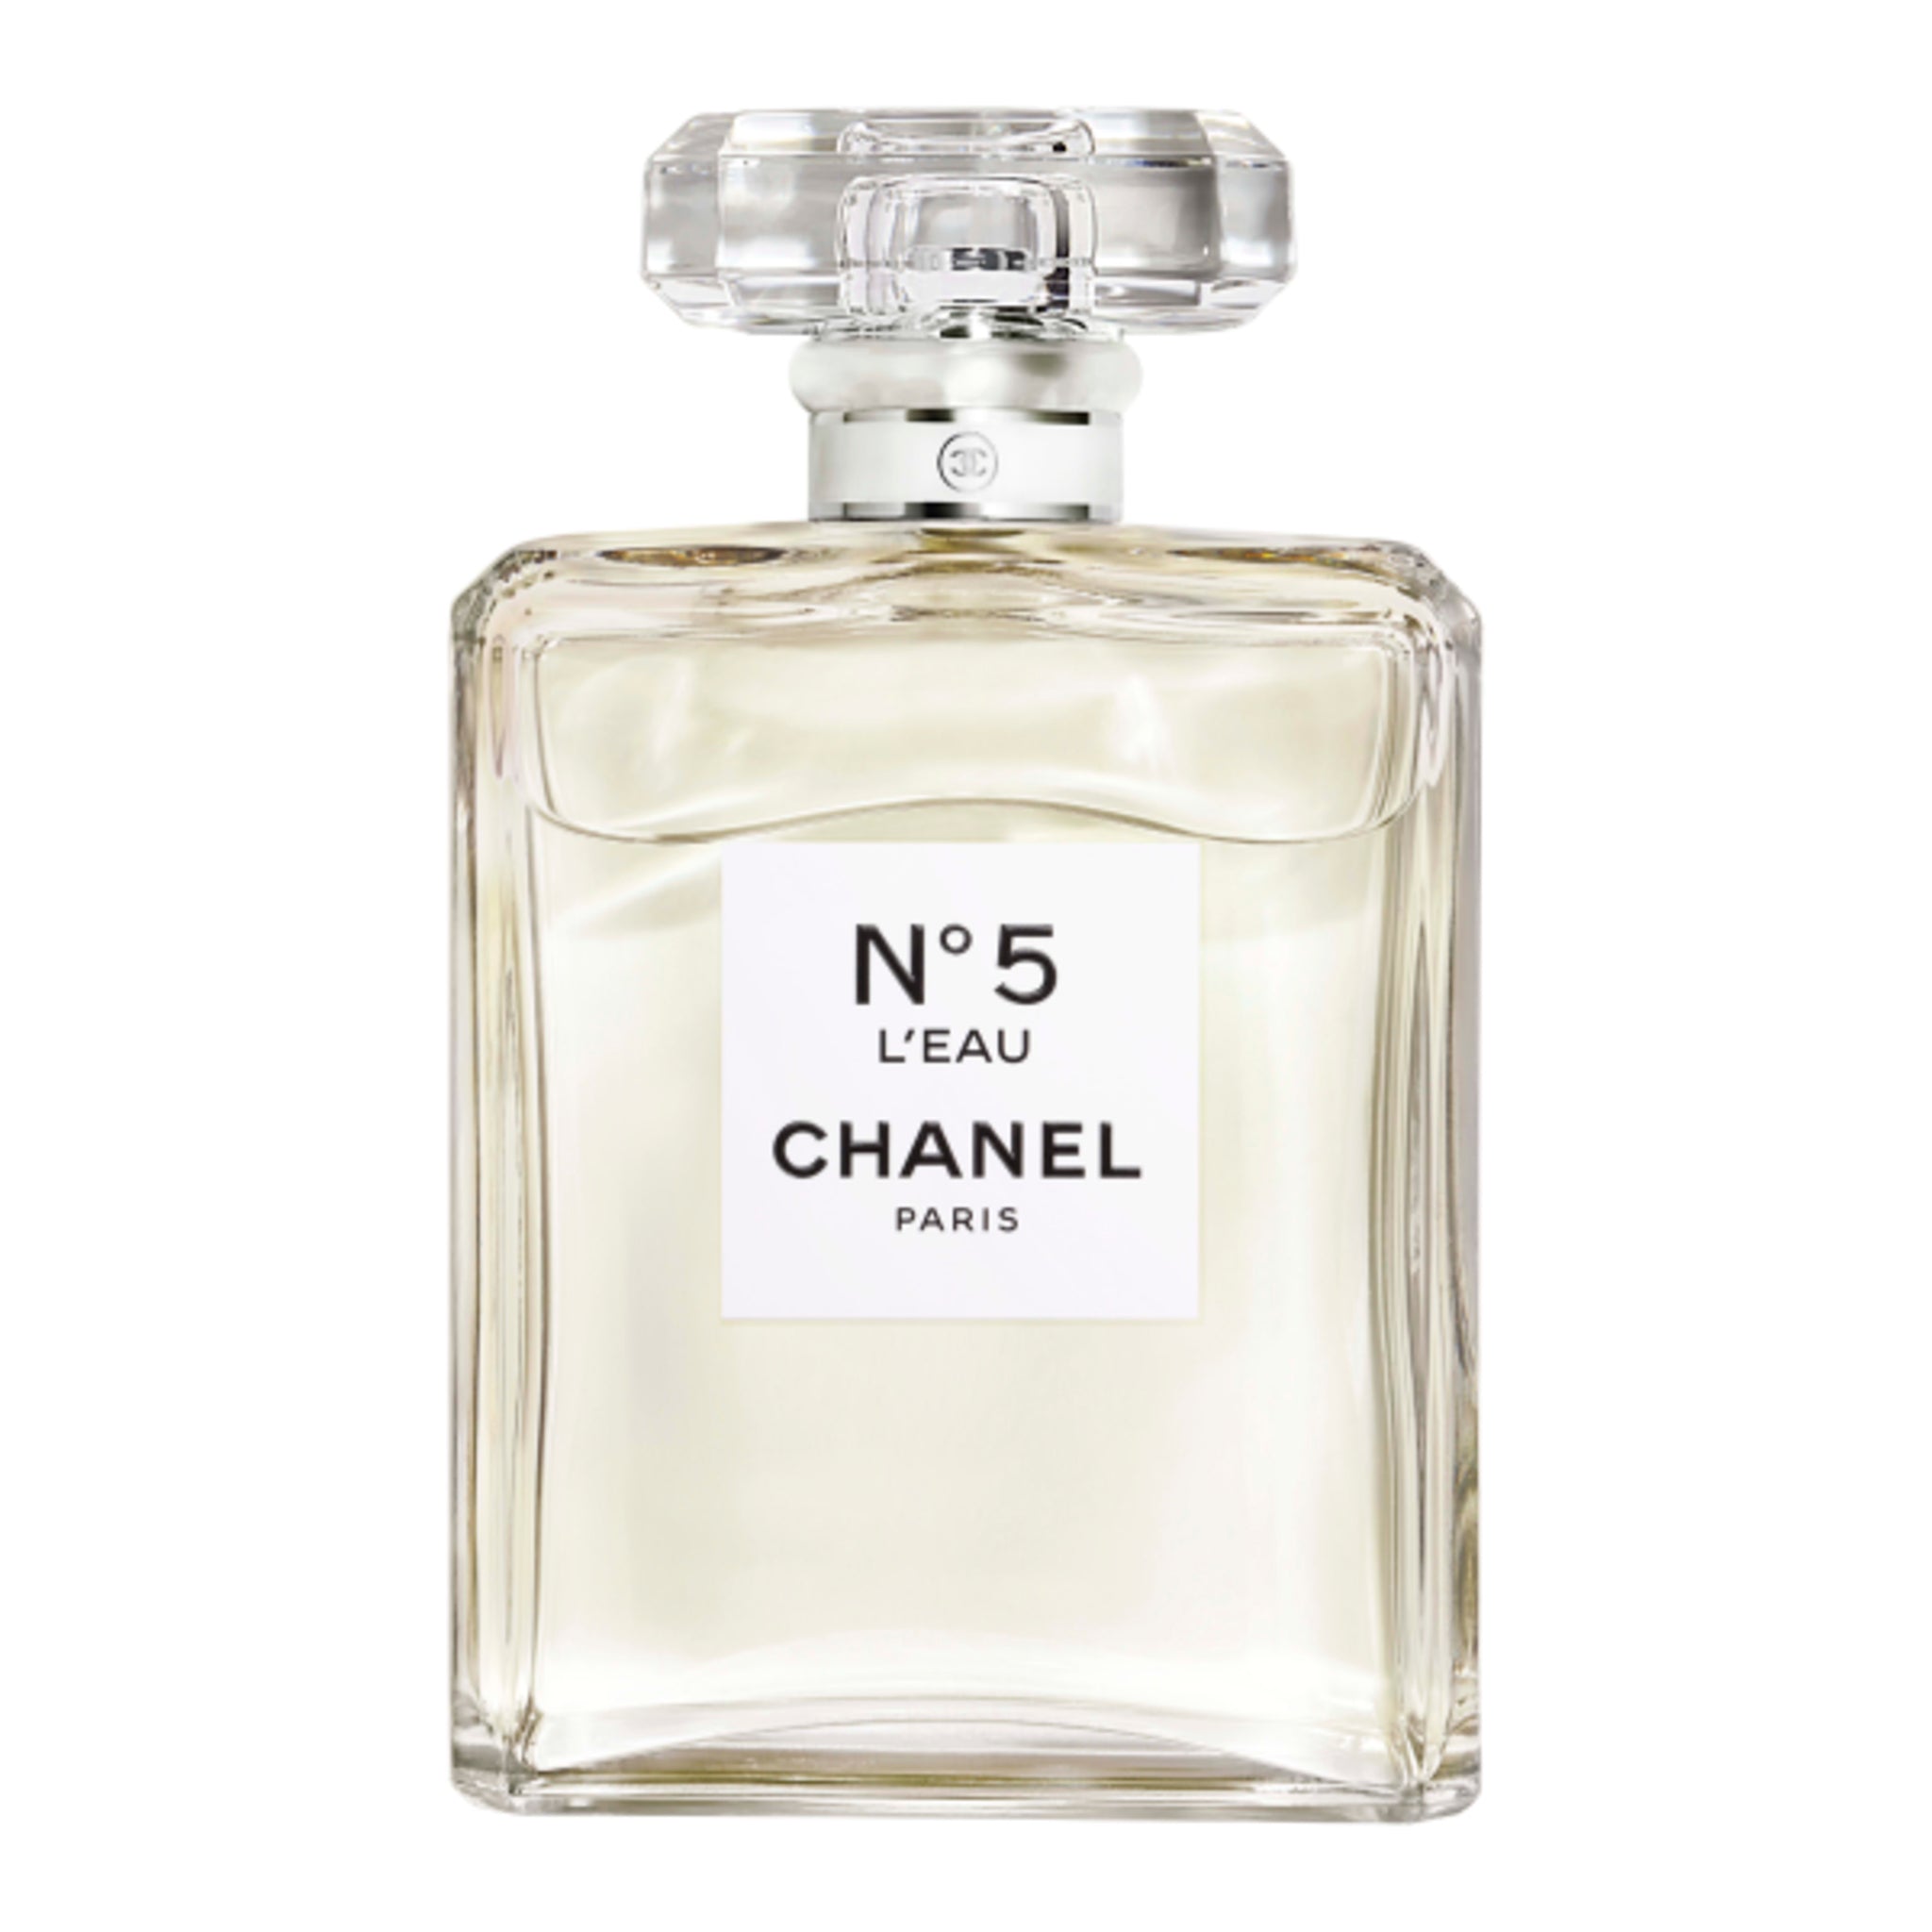 No 5 By Chanel EDP Perfume – Splash Fragrance